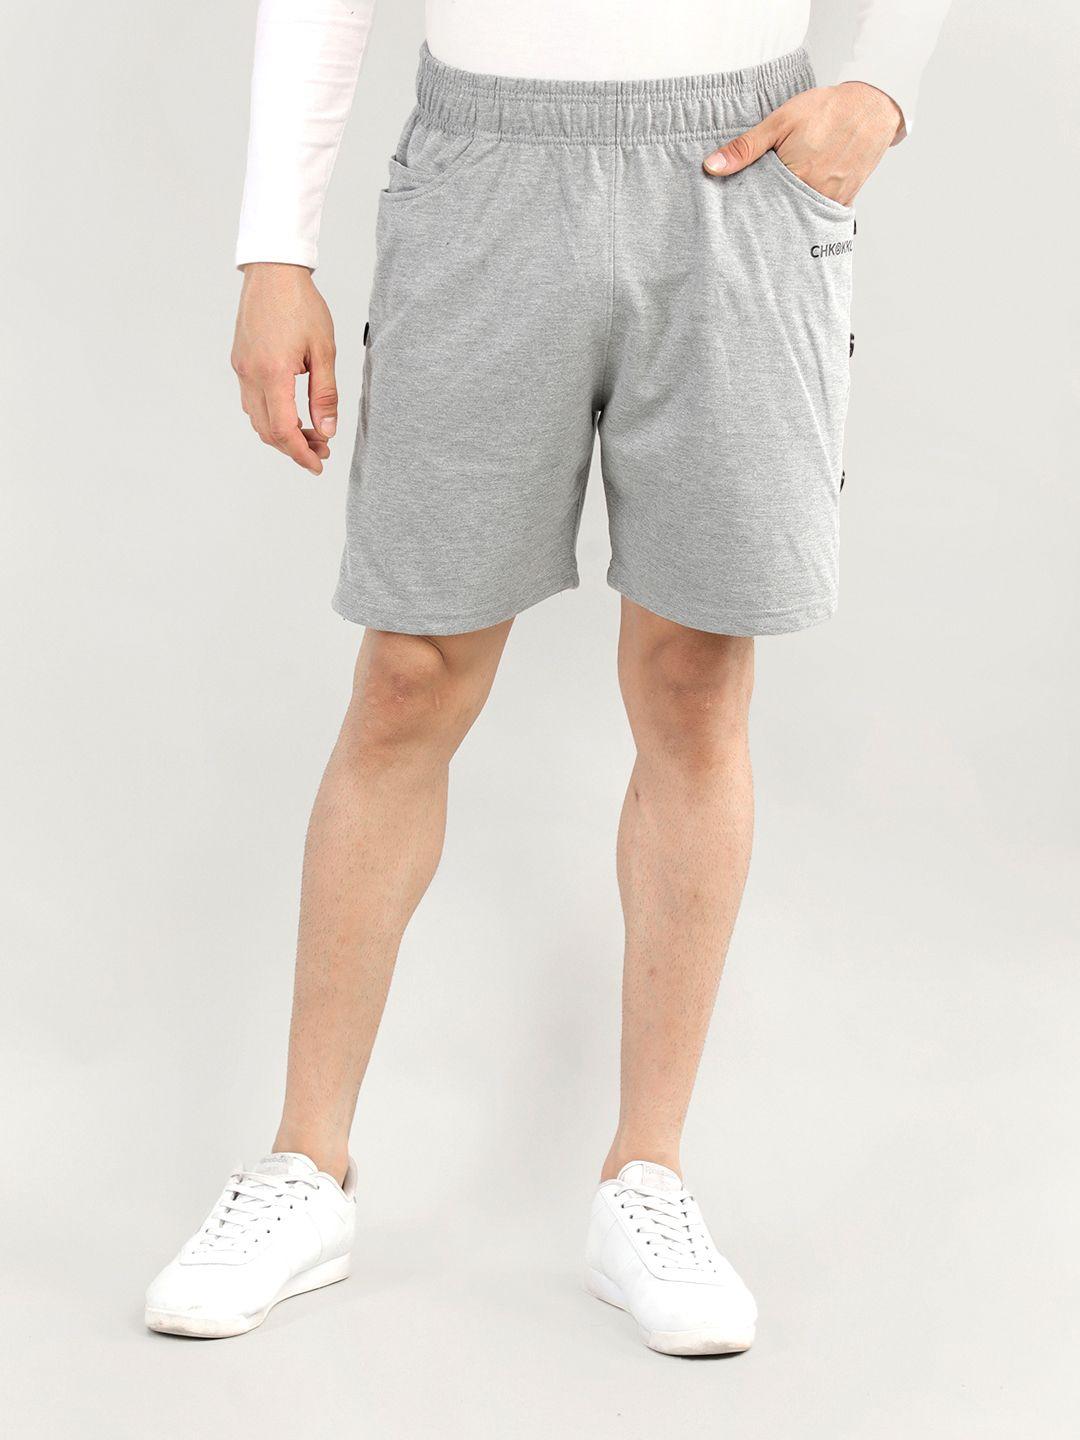 chkokko-men-grey-outdoor-shorts